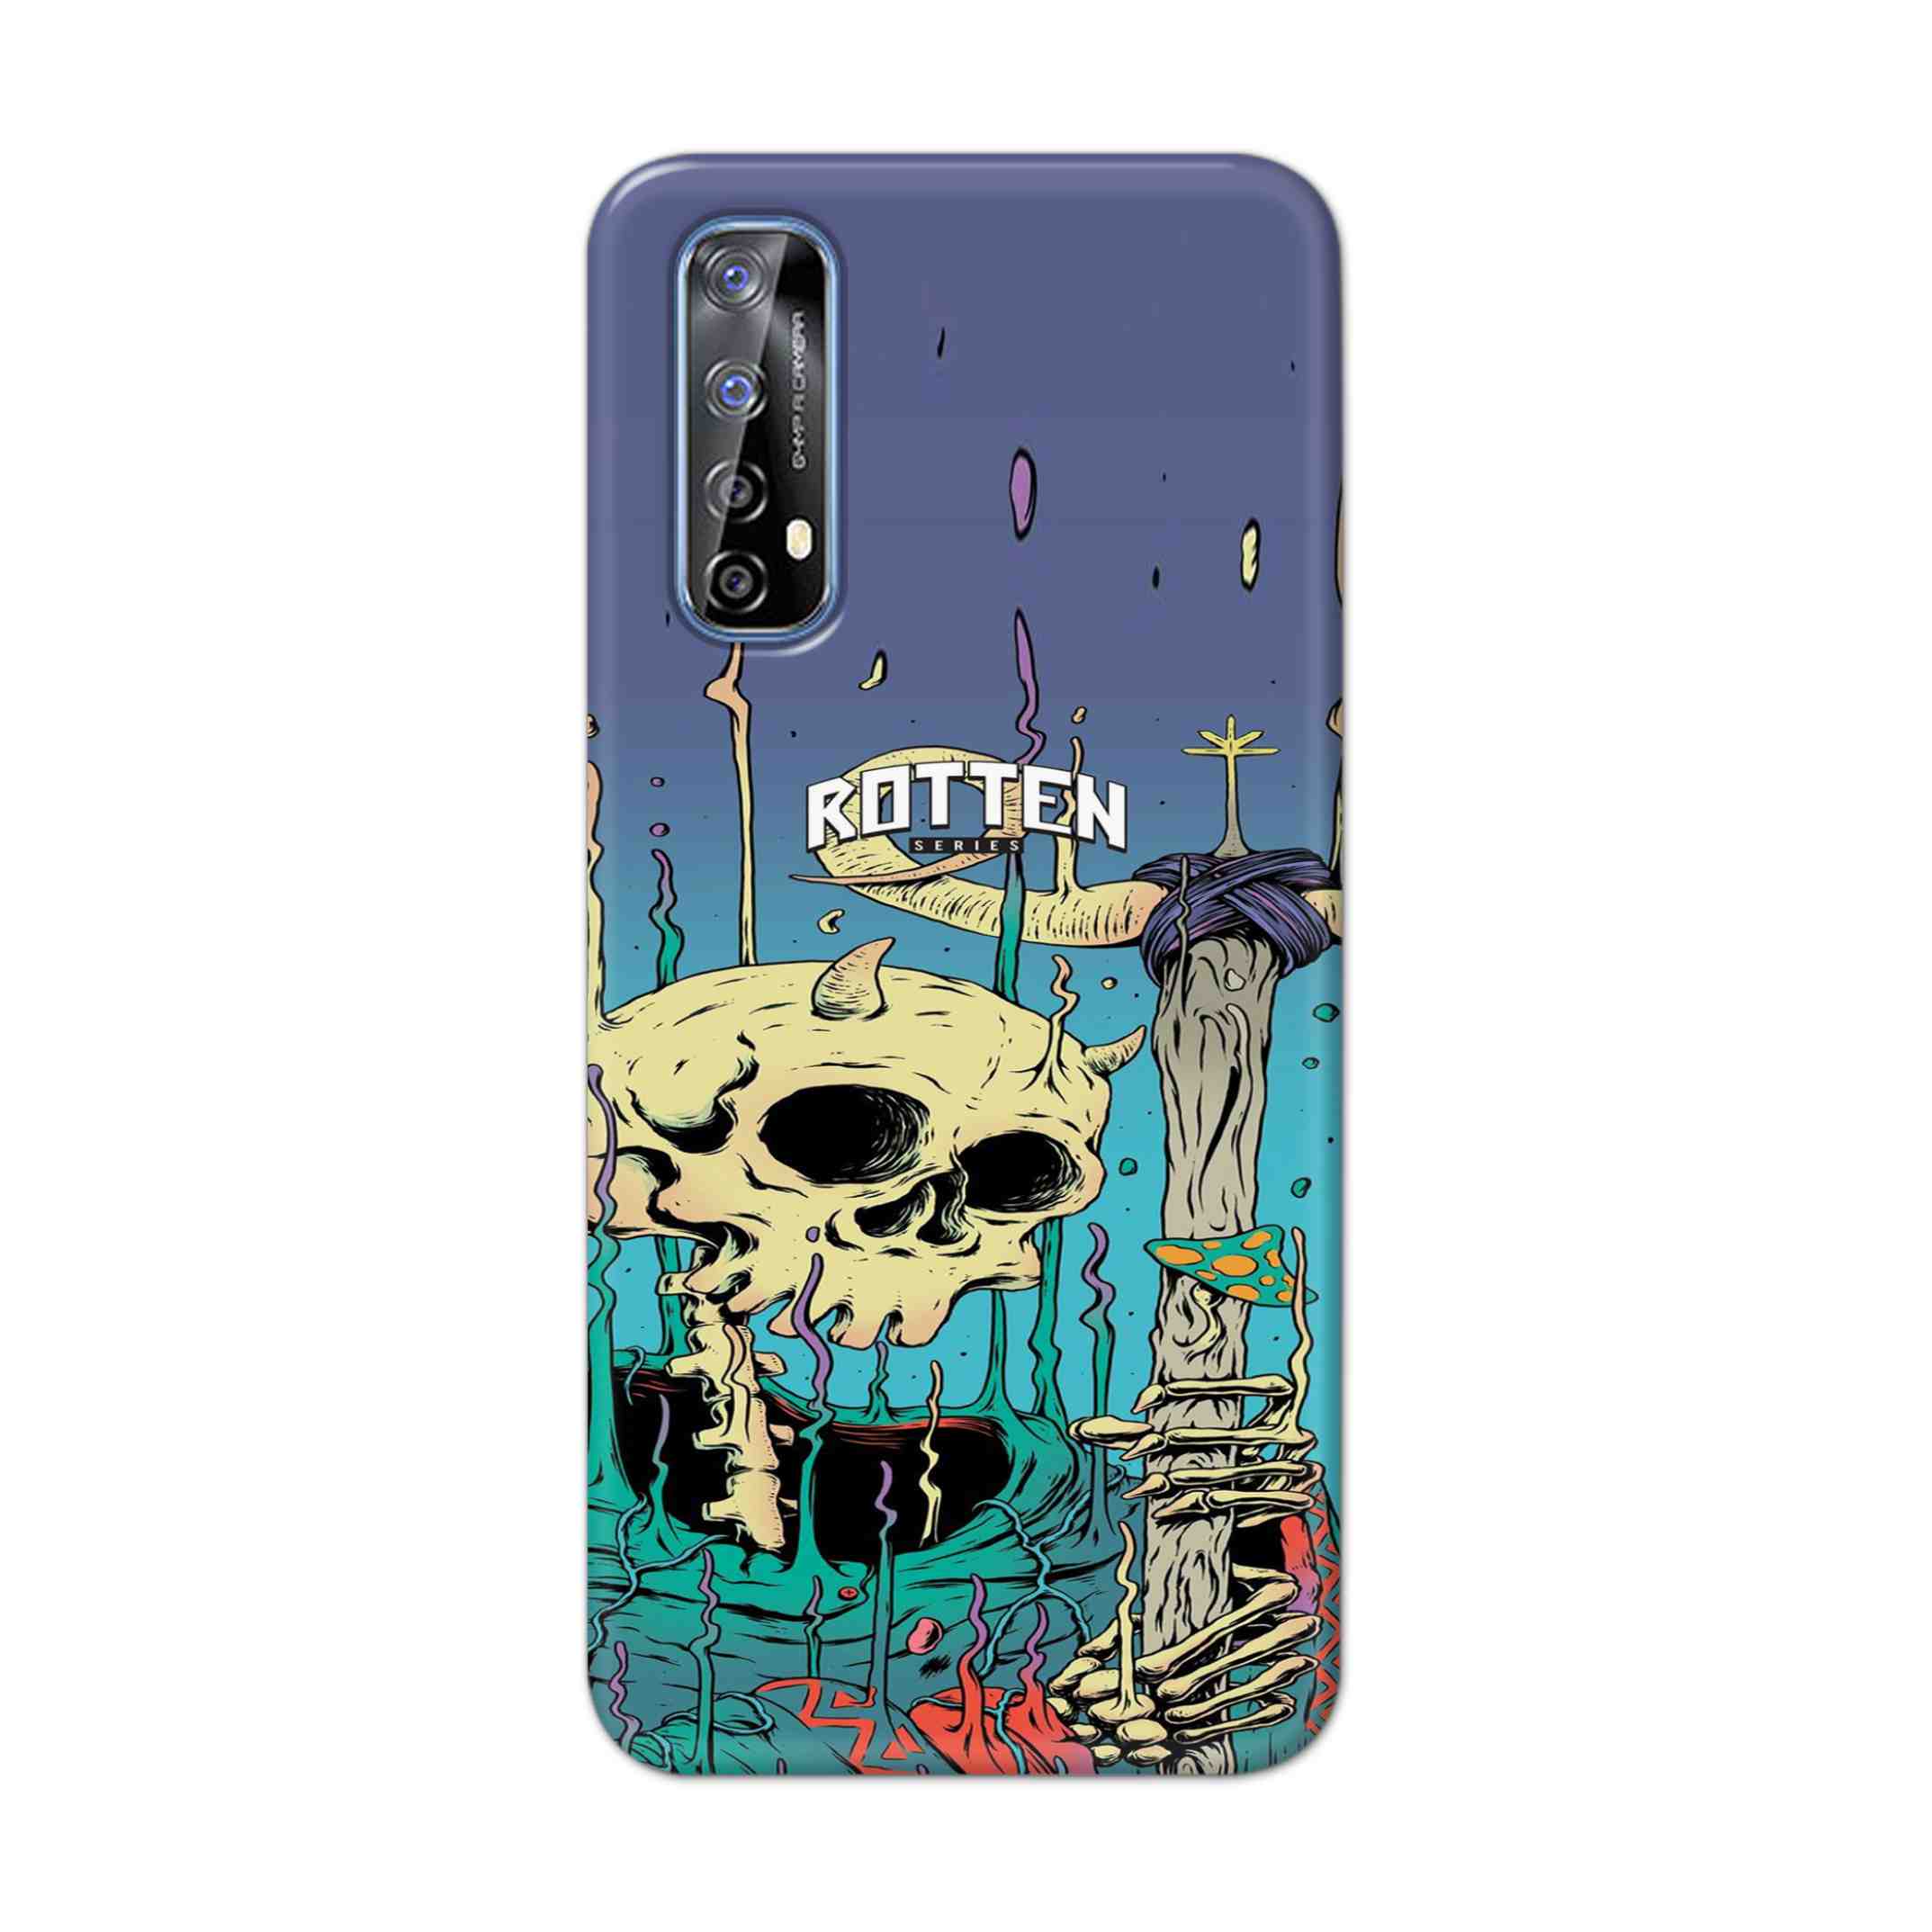 Buy Skull Hard Back Mobile Phone Case Cover For Realme 7 Online